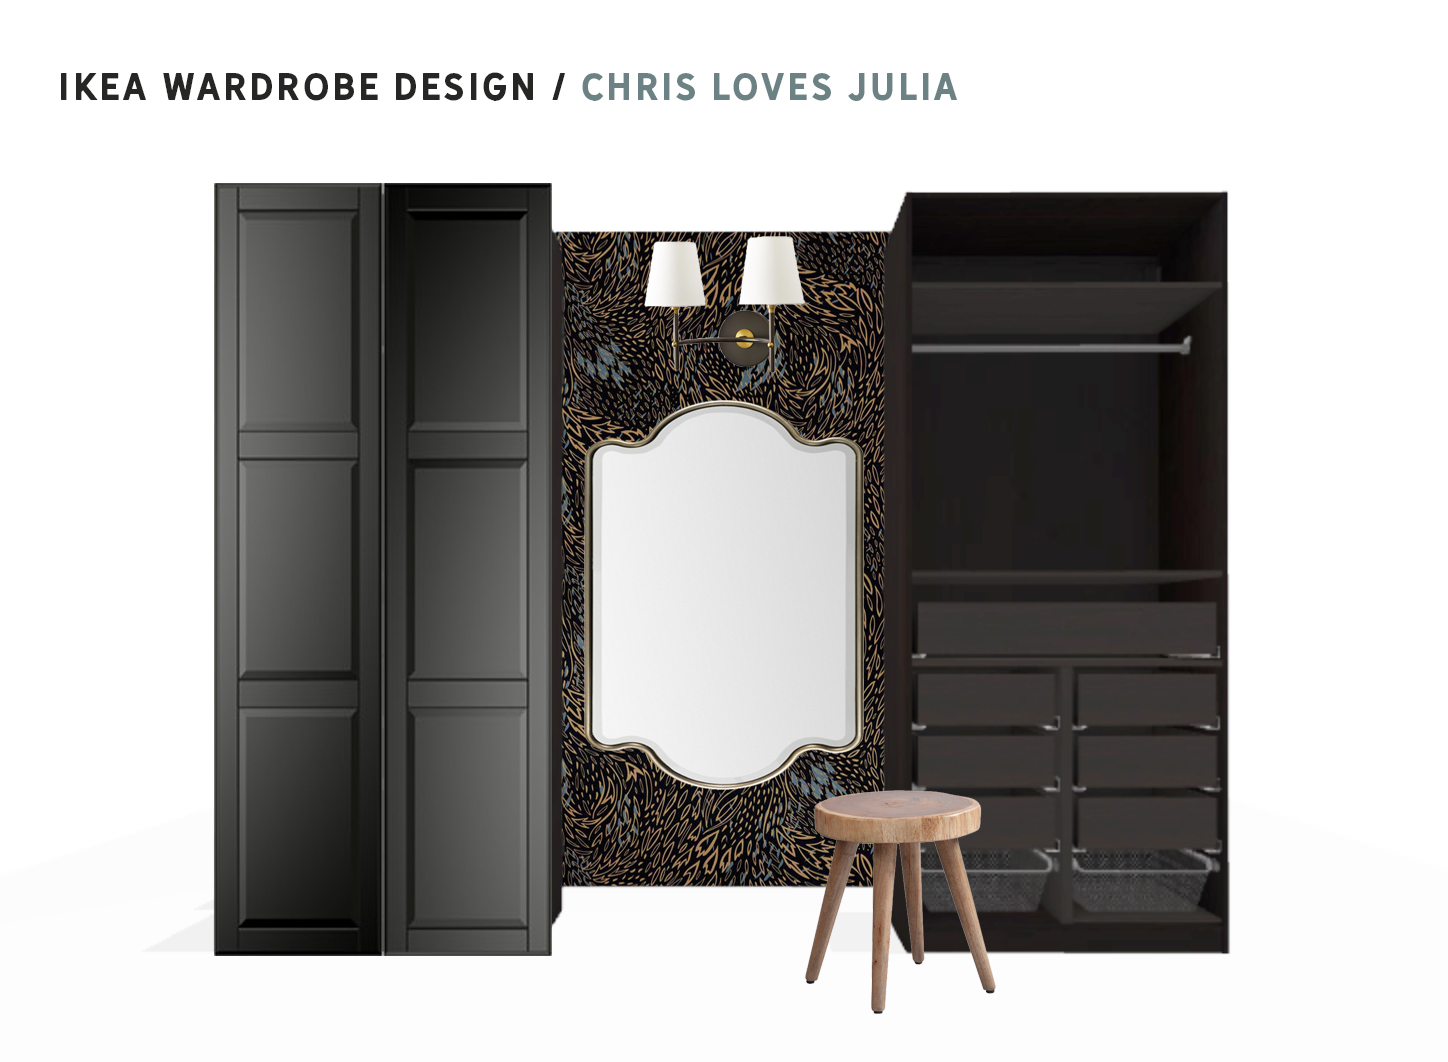 chris loves julia wardrobe design